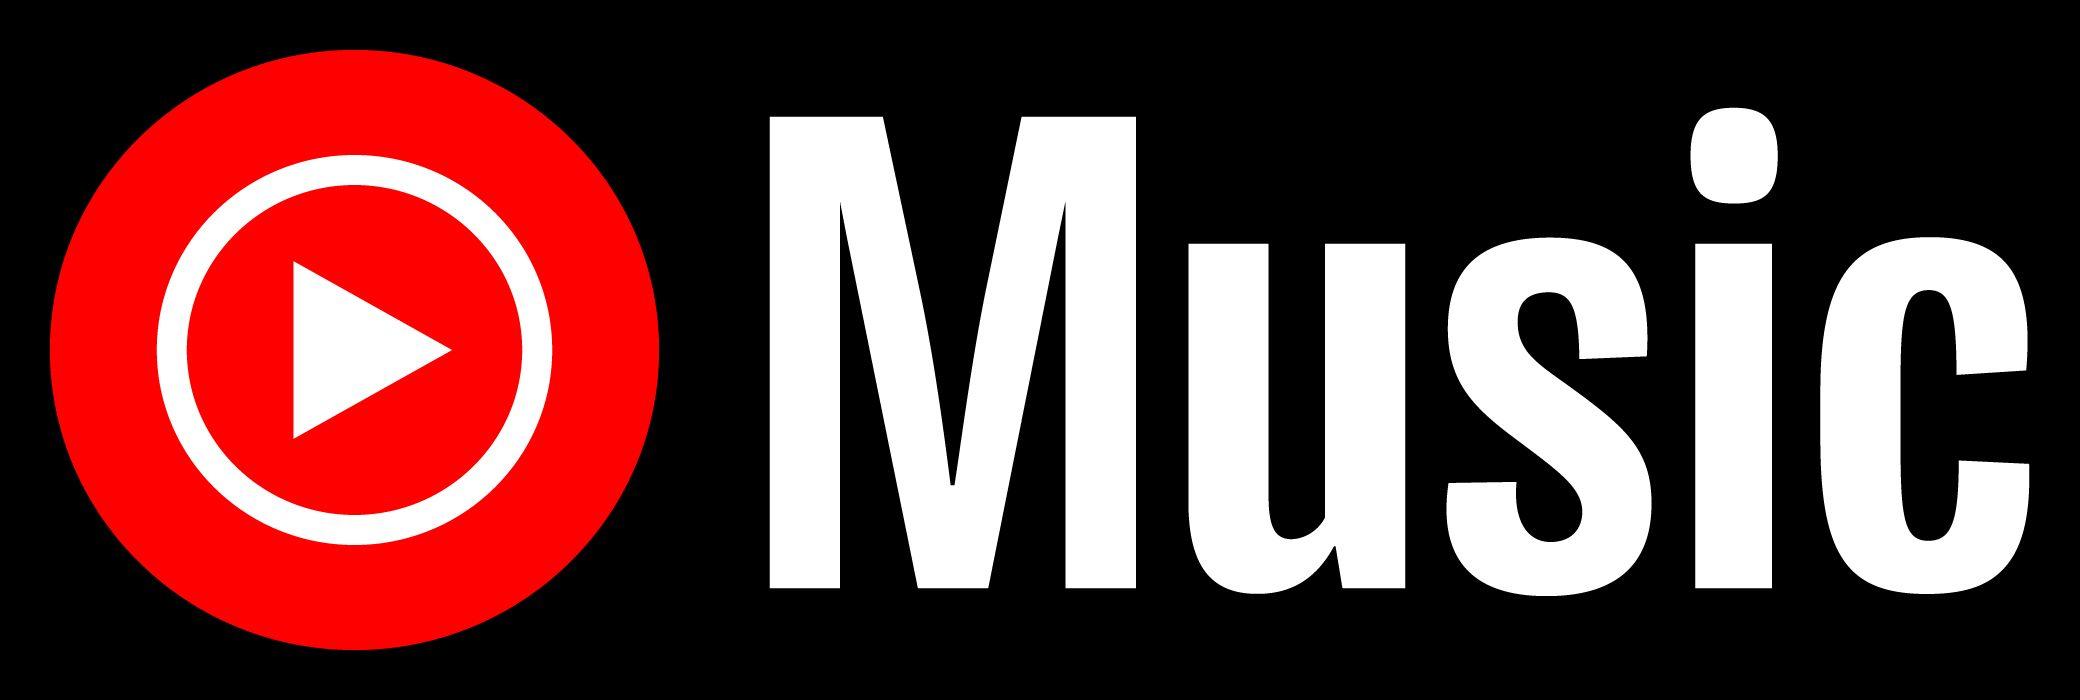 YouTube Music Logo - Premium subscribers in Q3 2020